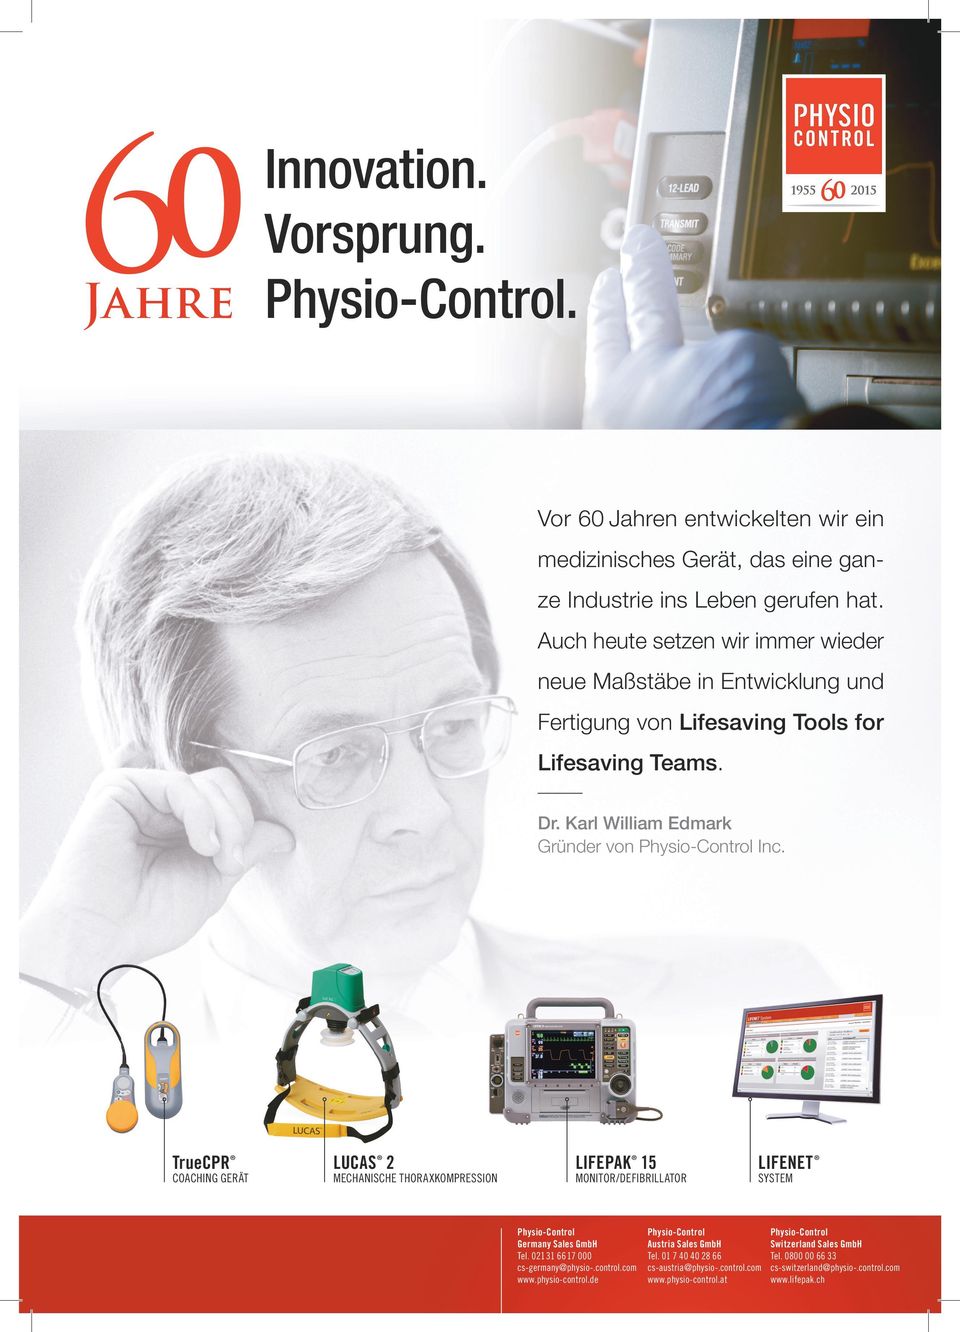 TrueCPR coaching Gerät LUCAS 2 mechanische Thoraxkompression LIFEPAK 15 Monitor/Defibrillator Physio-Control Germany Sales GmbH Tel. 021 31 66 17 000 cs-germany@physio-.control.com www.